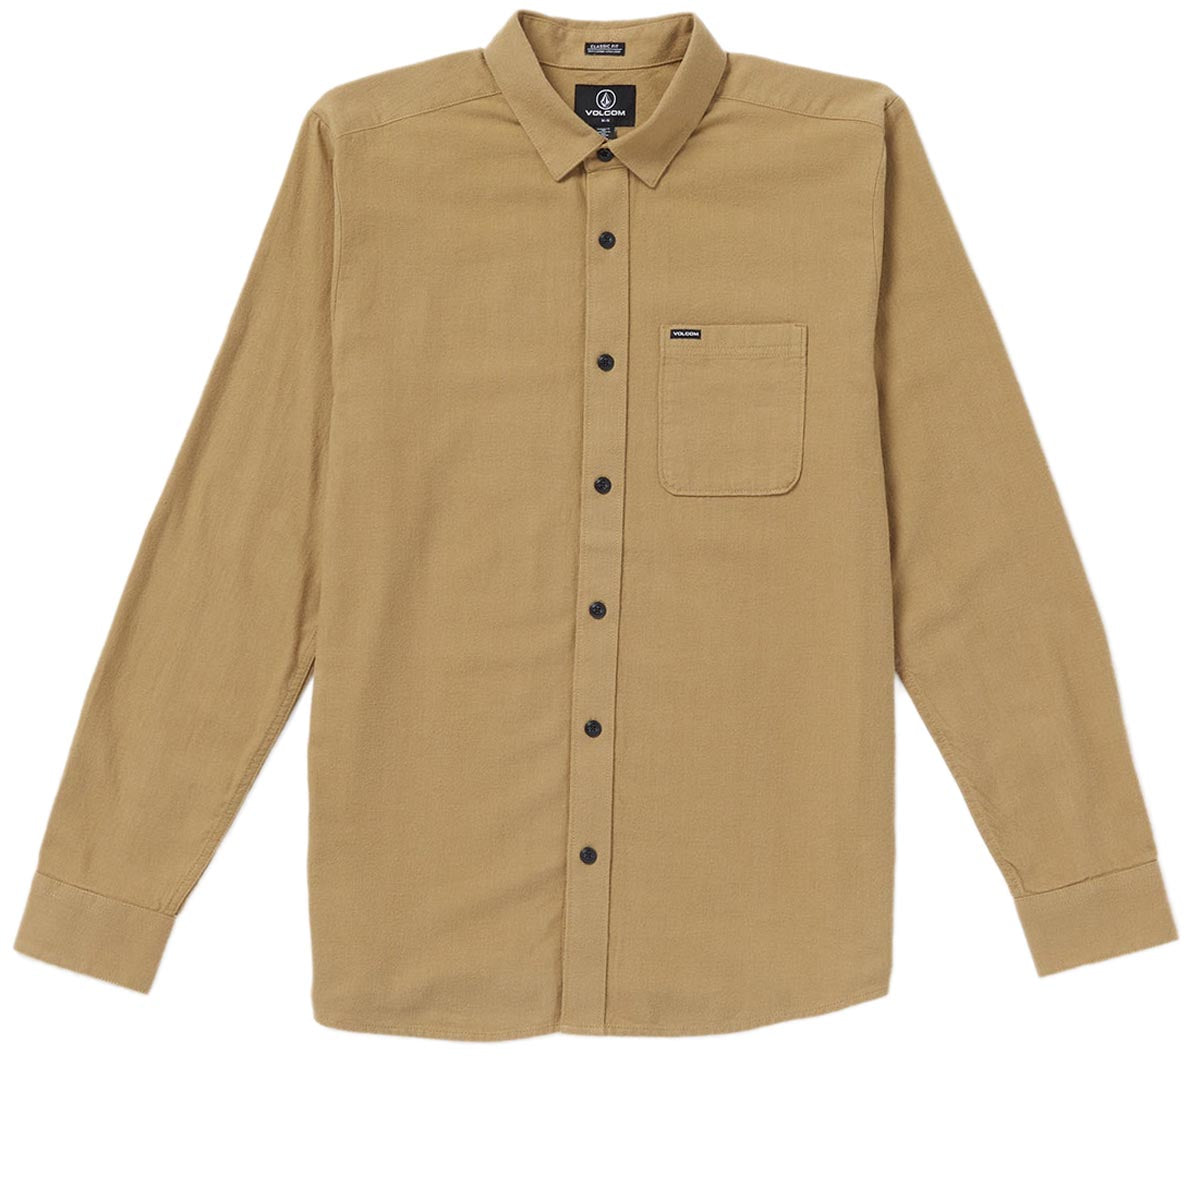 Volcom Caden Solid Long Sleeve Shirt - Dark Khaki image 1